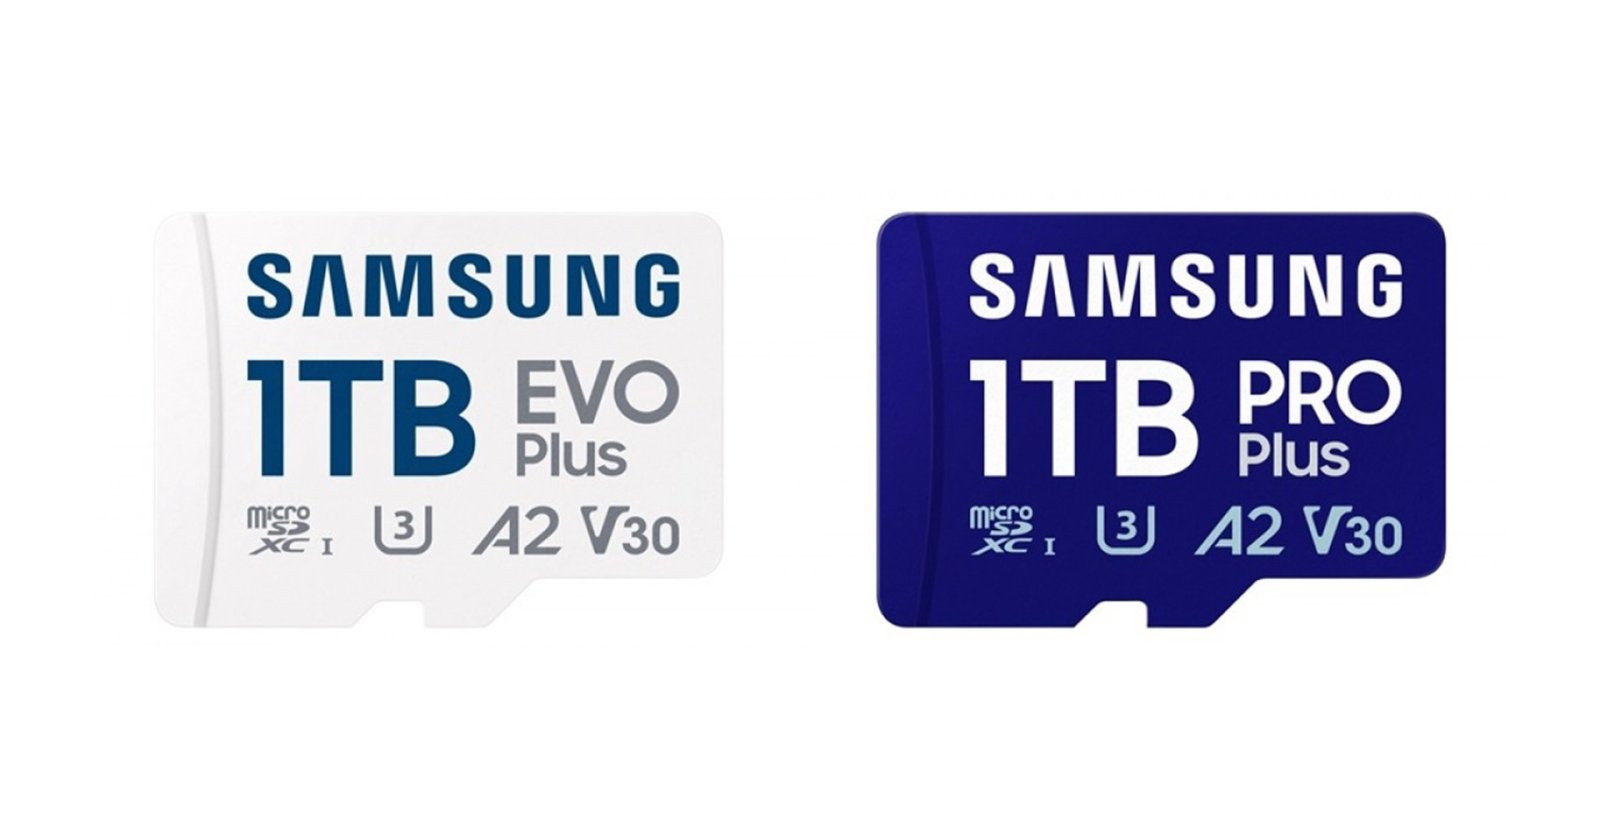 Samsung เริ่มผลิต microSD Card ระดับ 1 TB UHS-1 เต็มกำลัง: เริ่มขายไตรมาส 3 ปีนี้